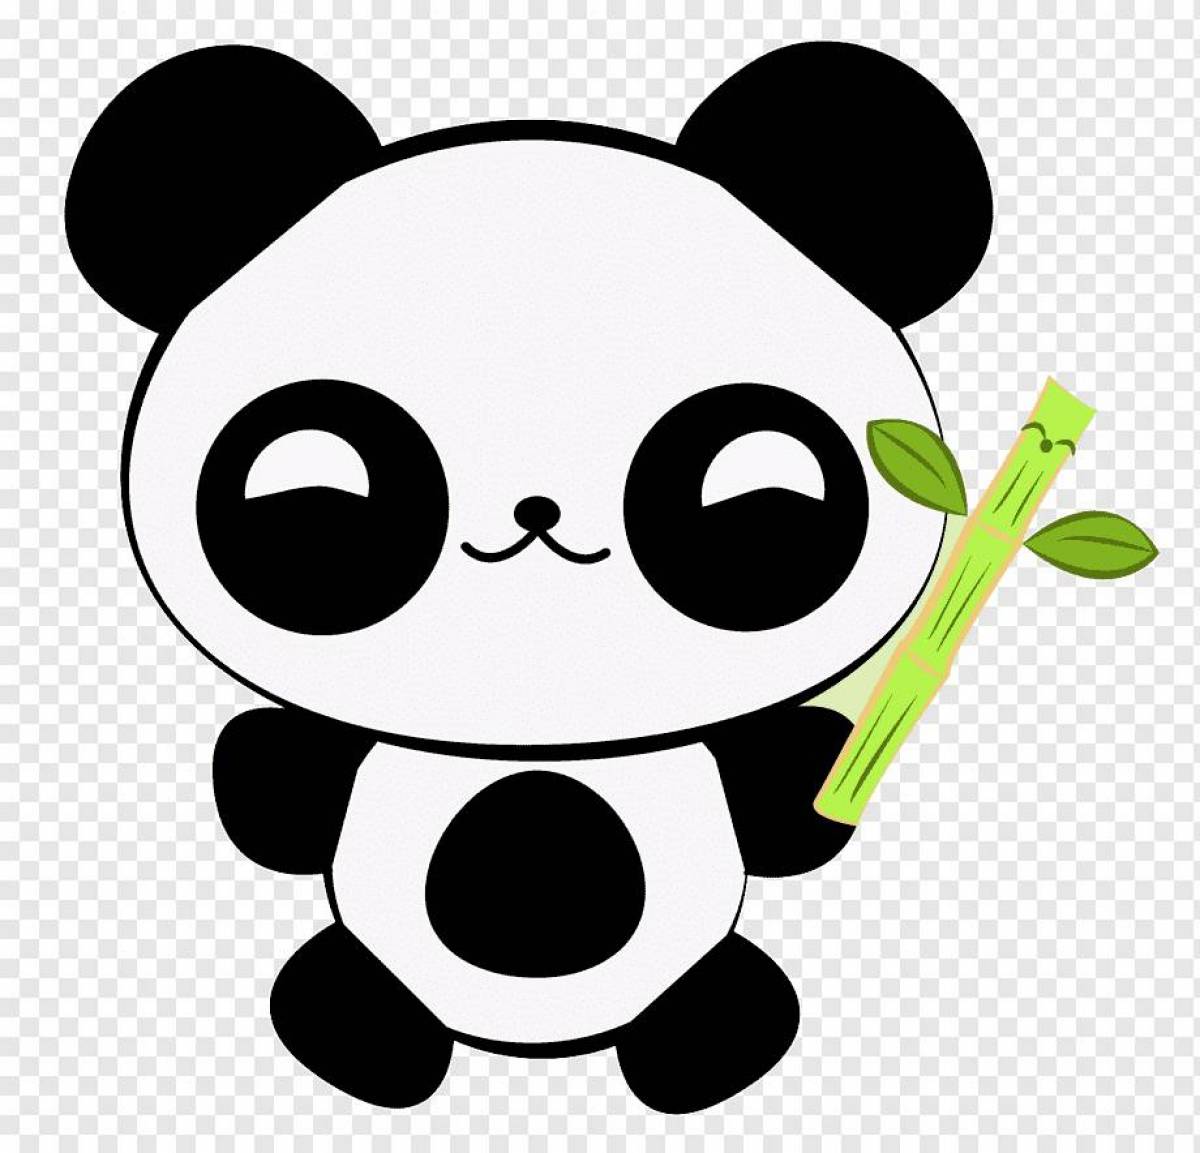 Adorable panda coloring page